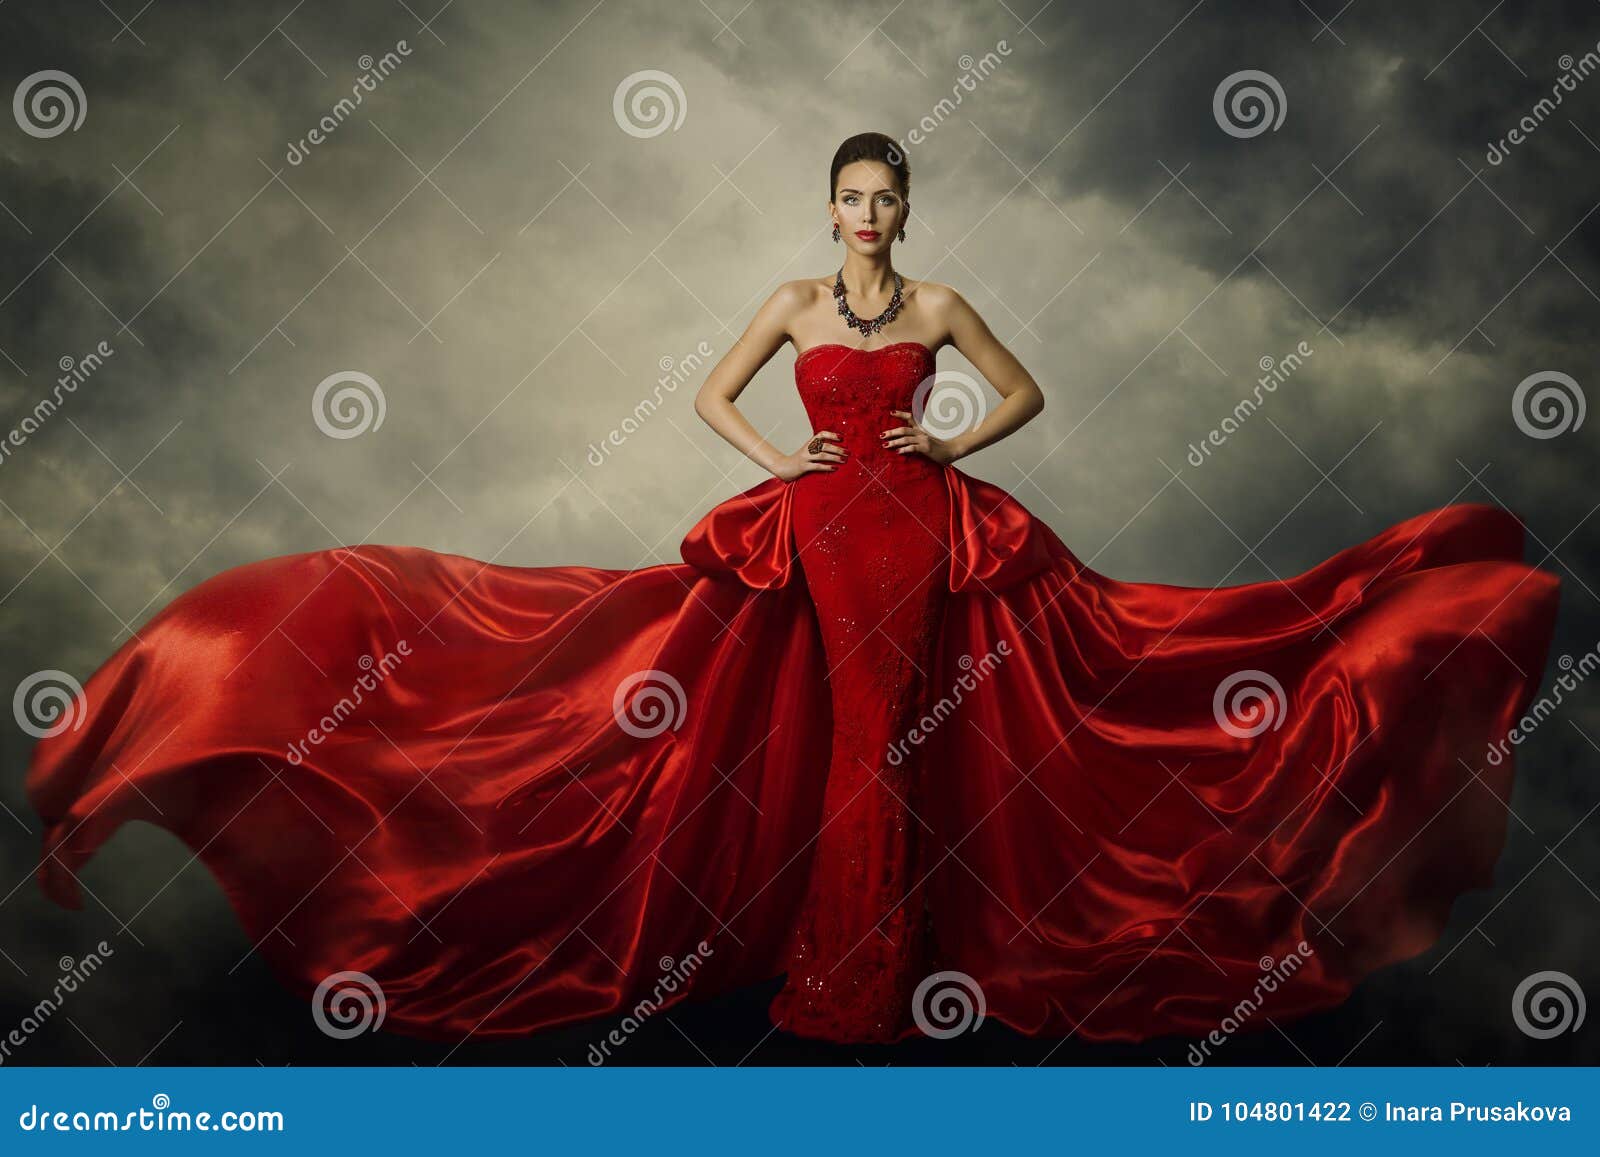 fashion model art dress, elegant woman red retro gown